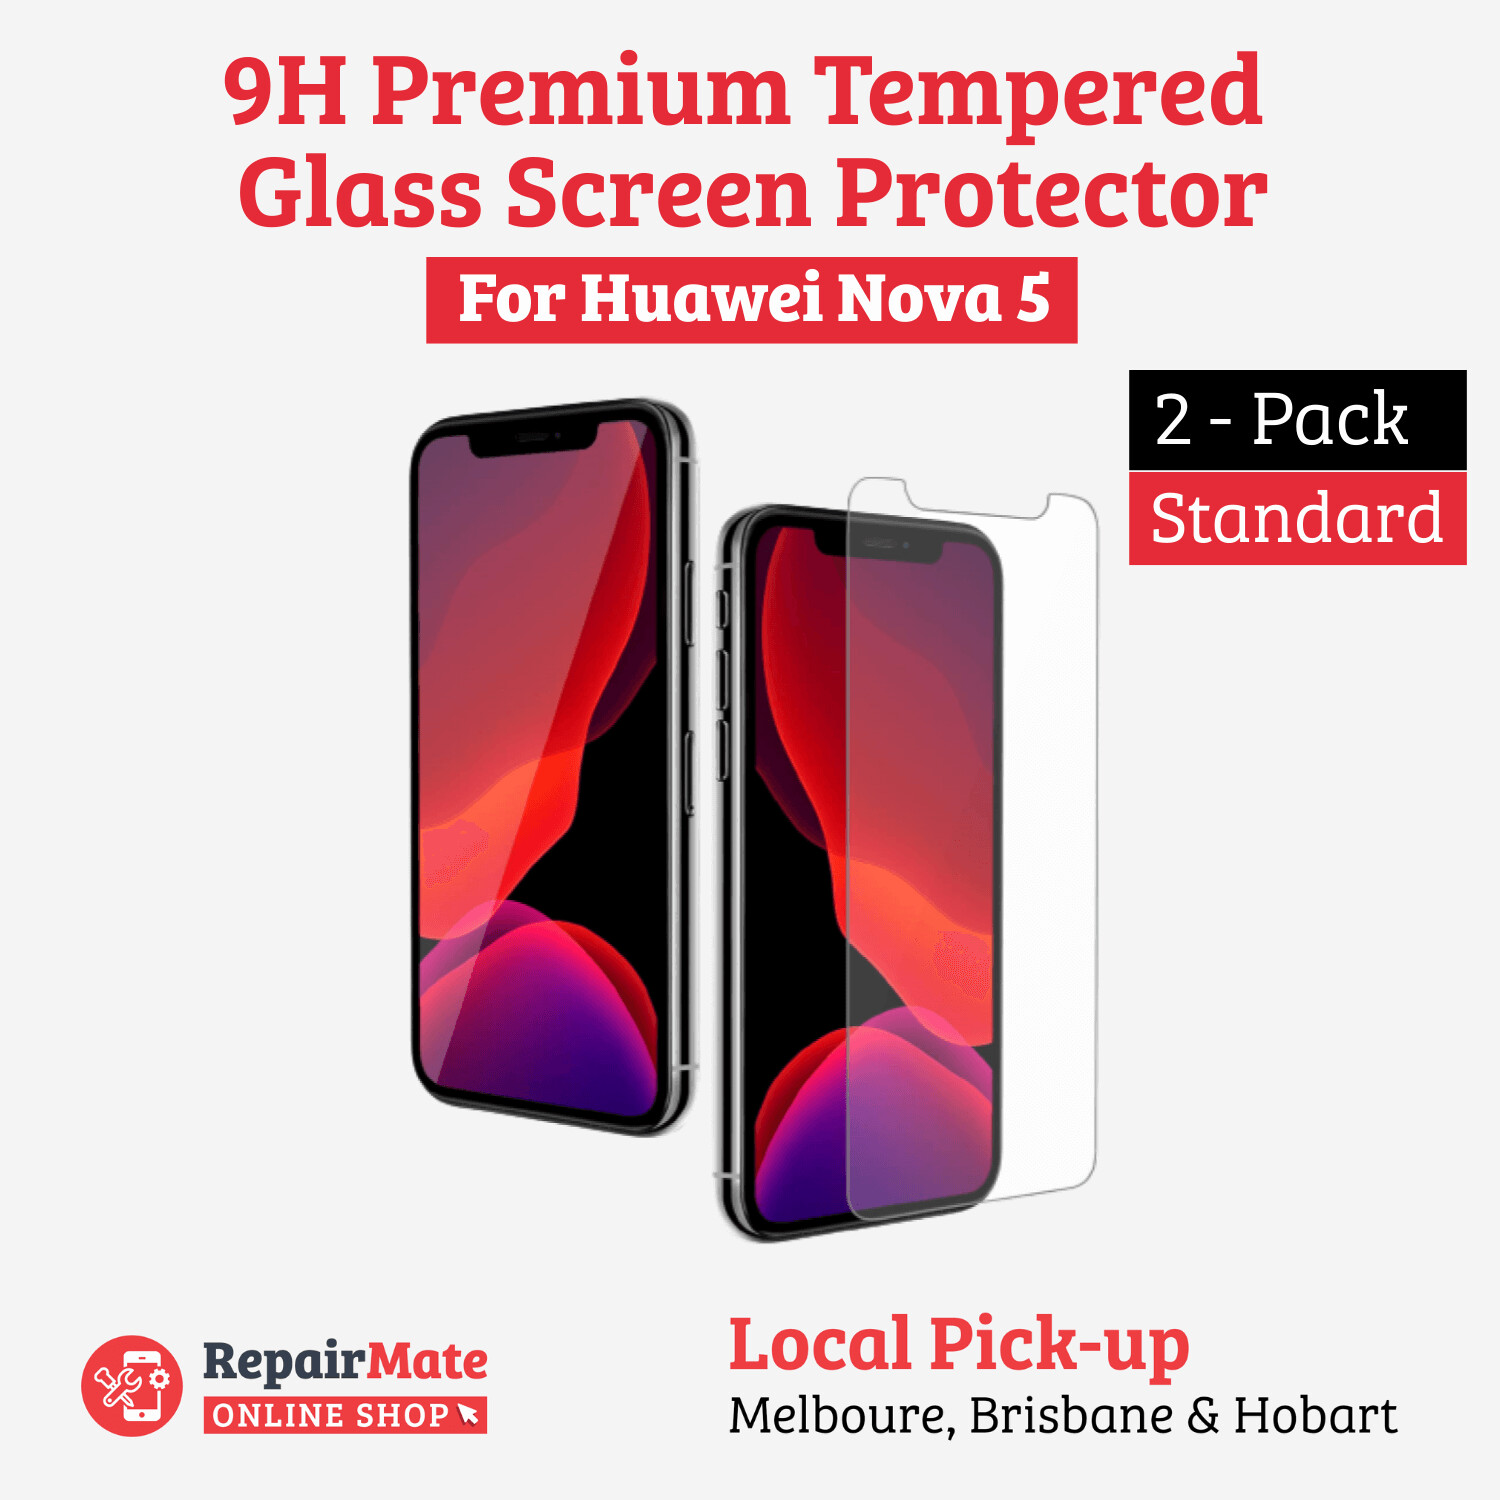 Huawei Nova 5 9H Premium Tempered Glass Screen Protector [2 Pack]